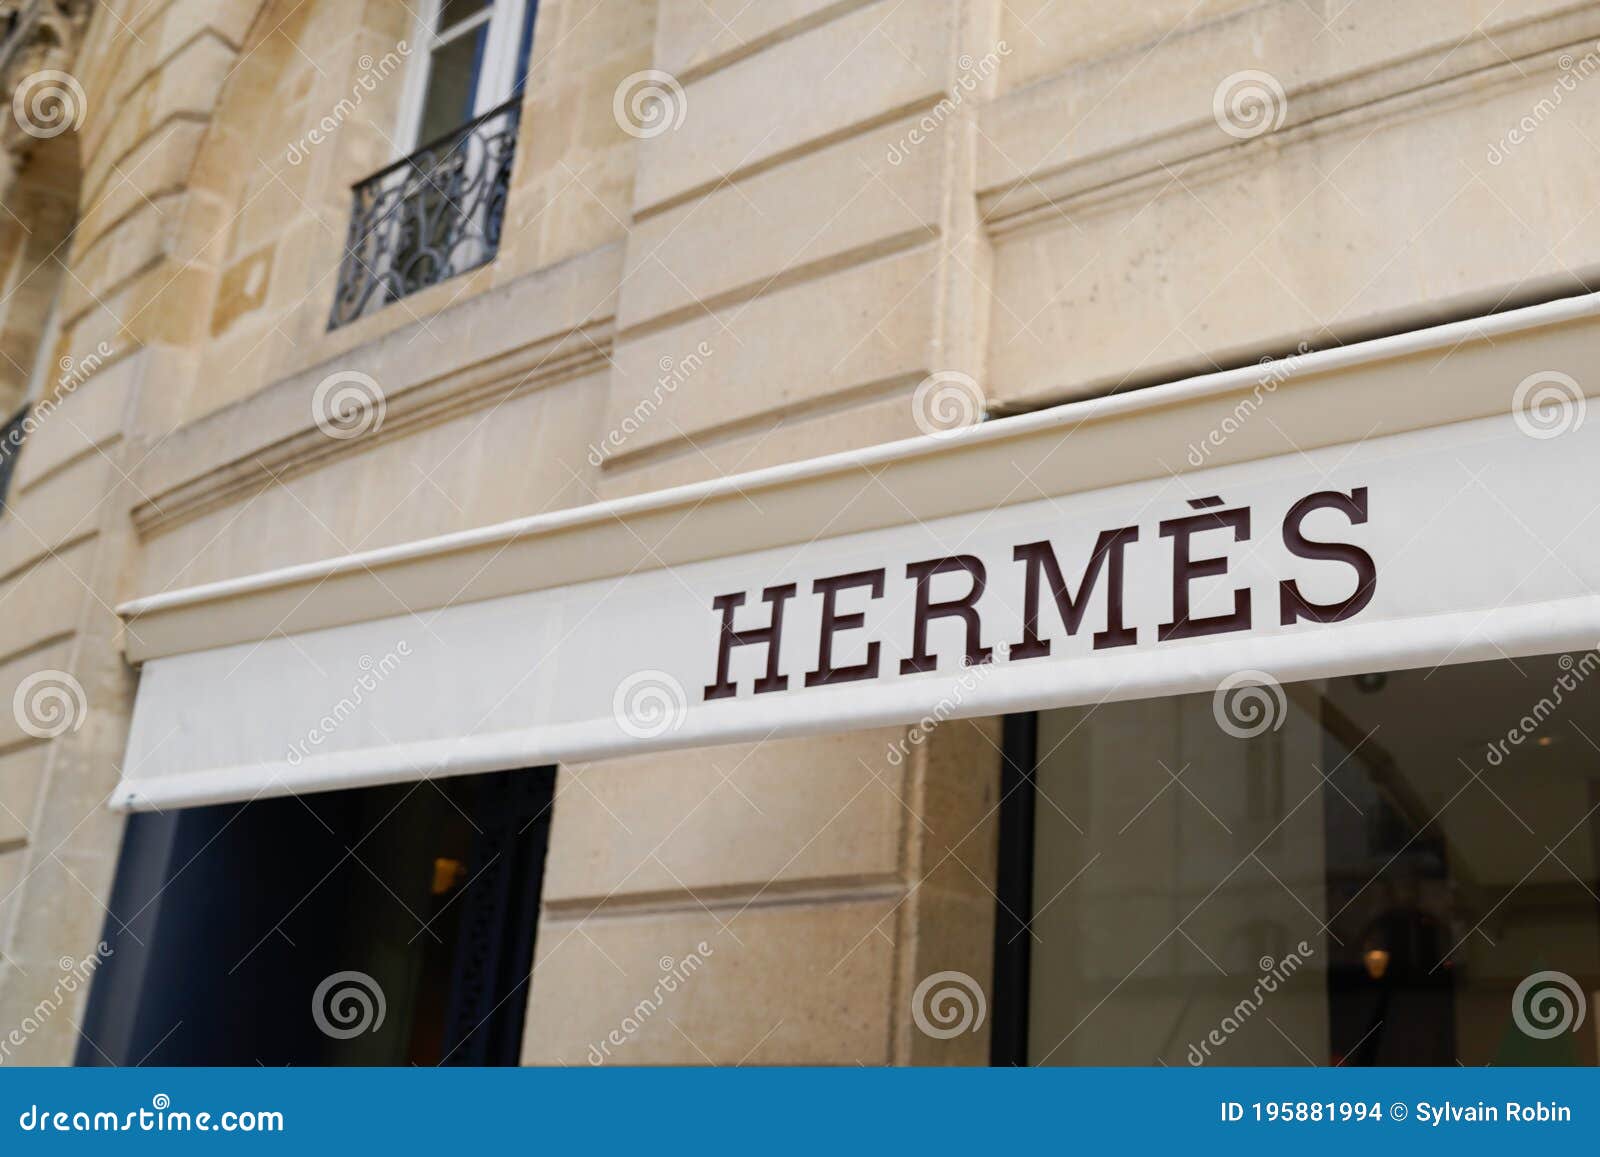 hermès luxury brands